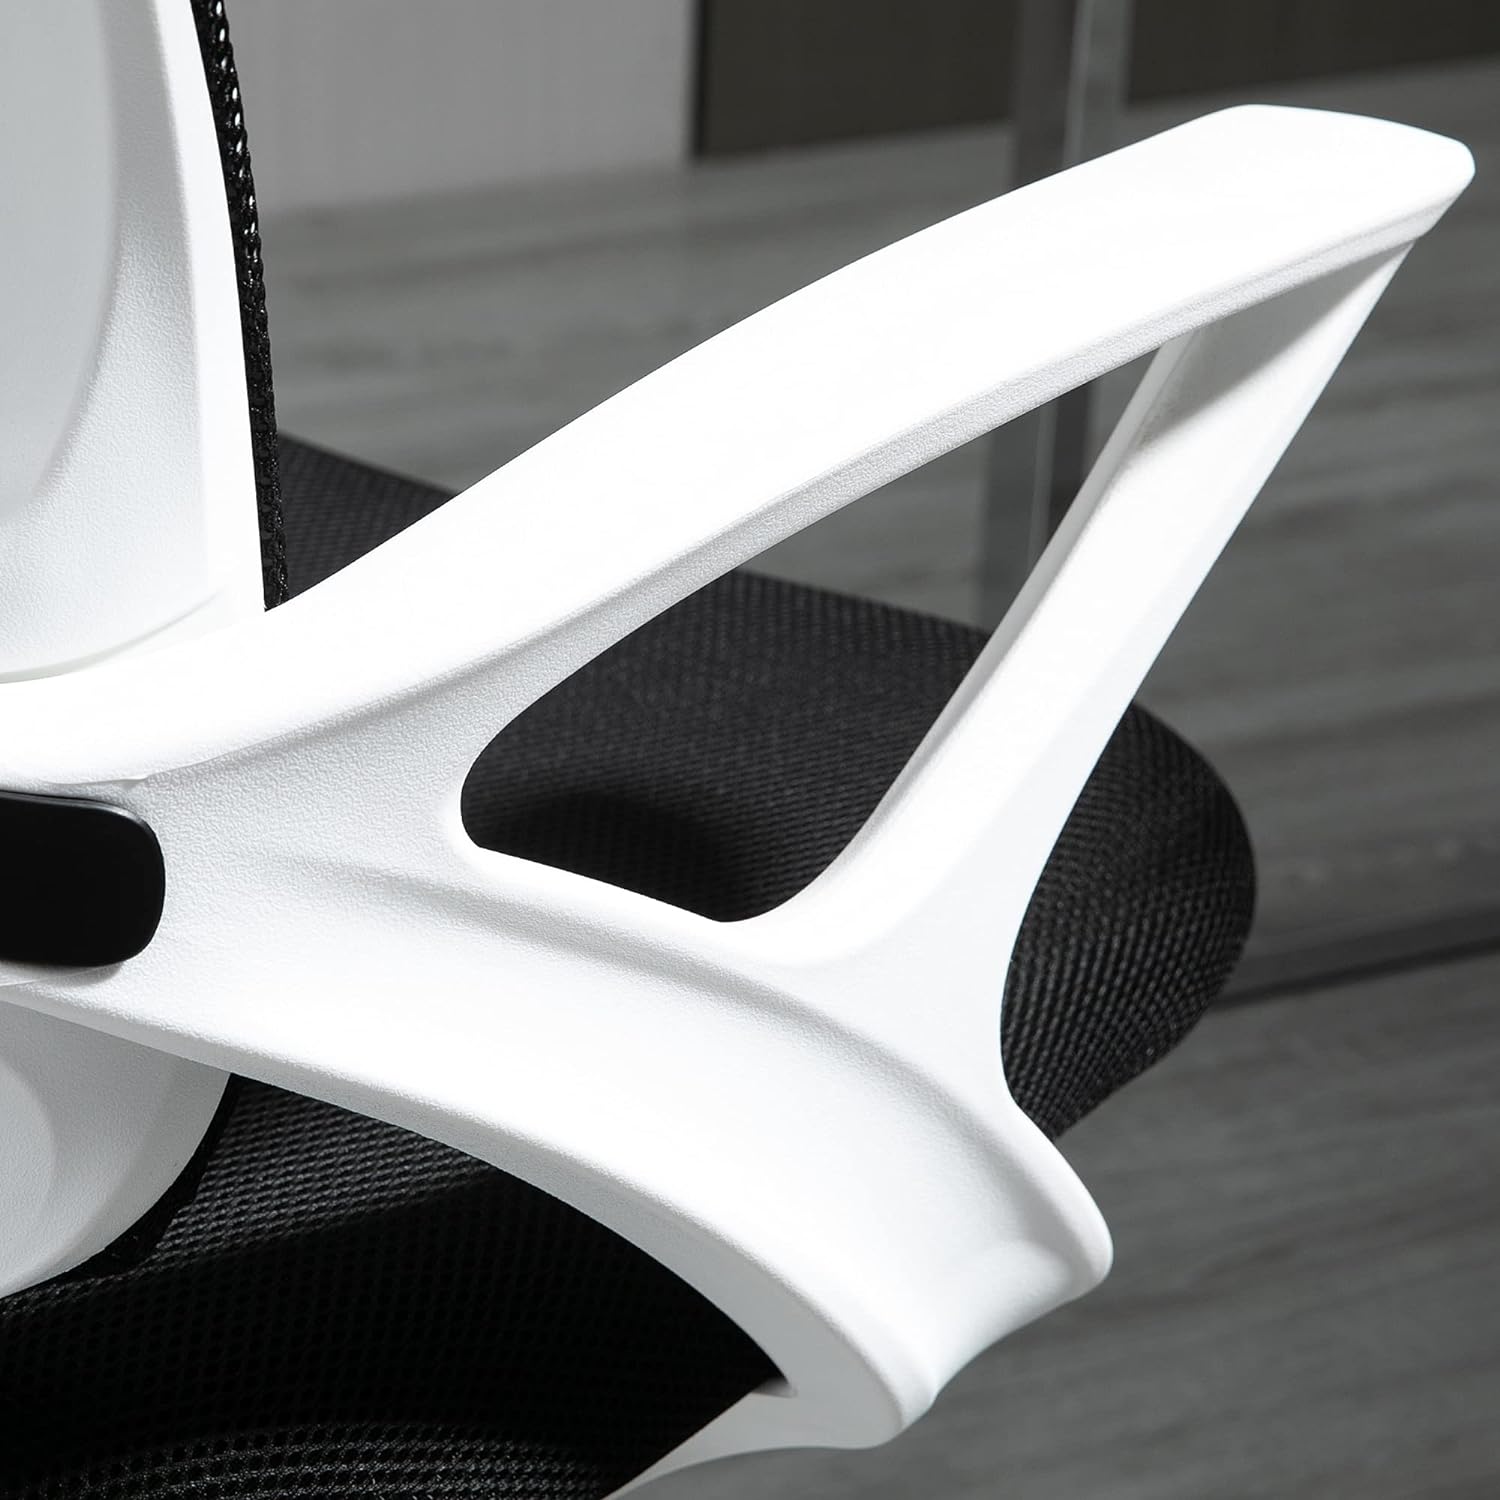 ProperAV Extra Ergonomic Adjustable Mesh Office Chair with Lumbar Back Support - maplin.co.uk